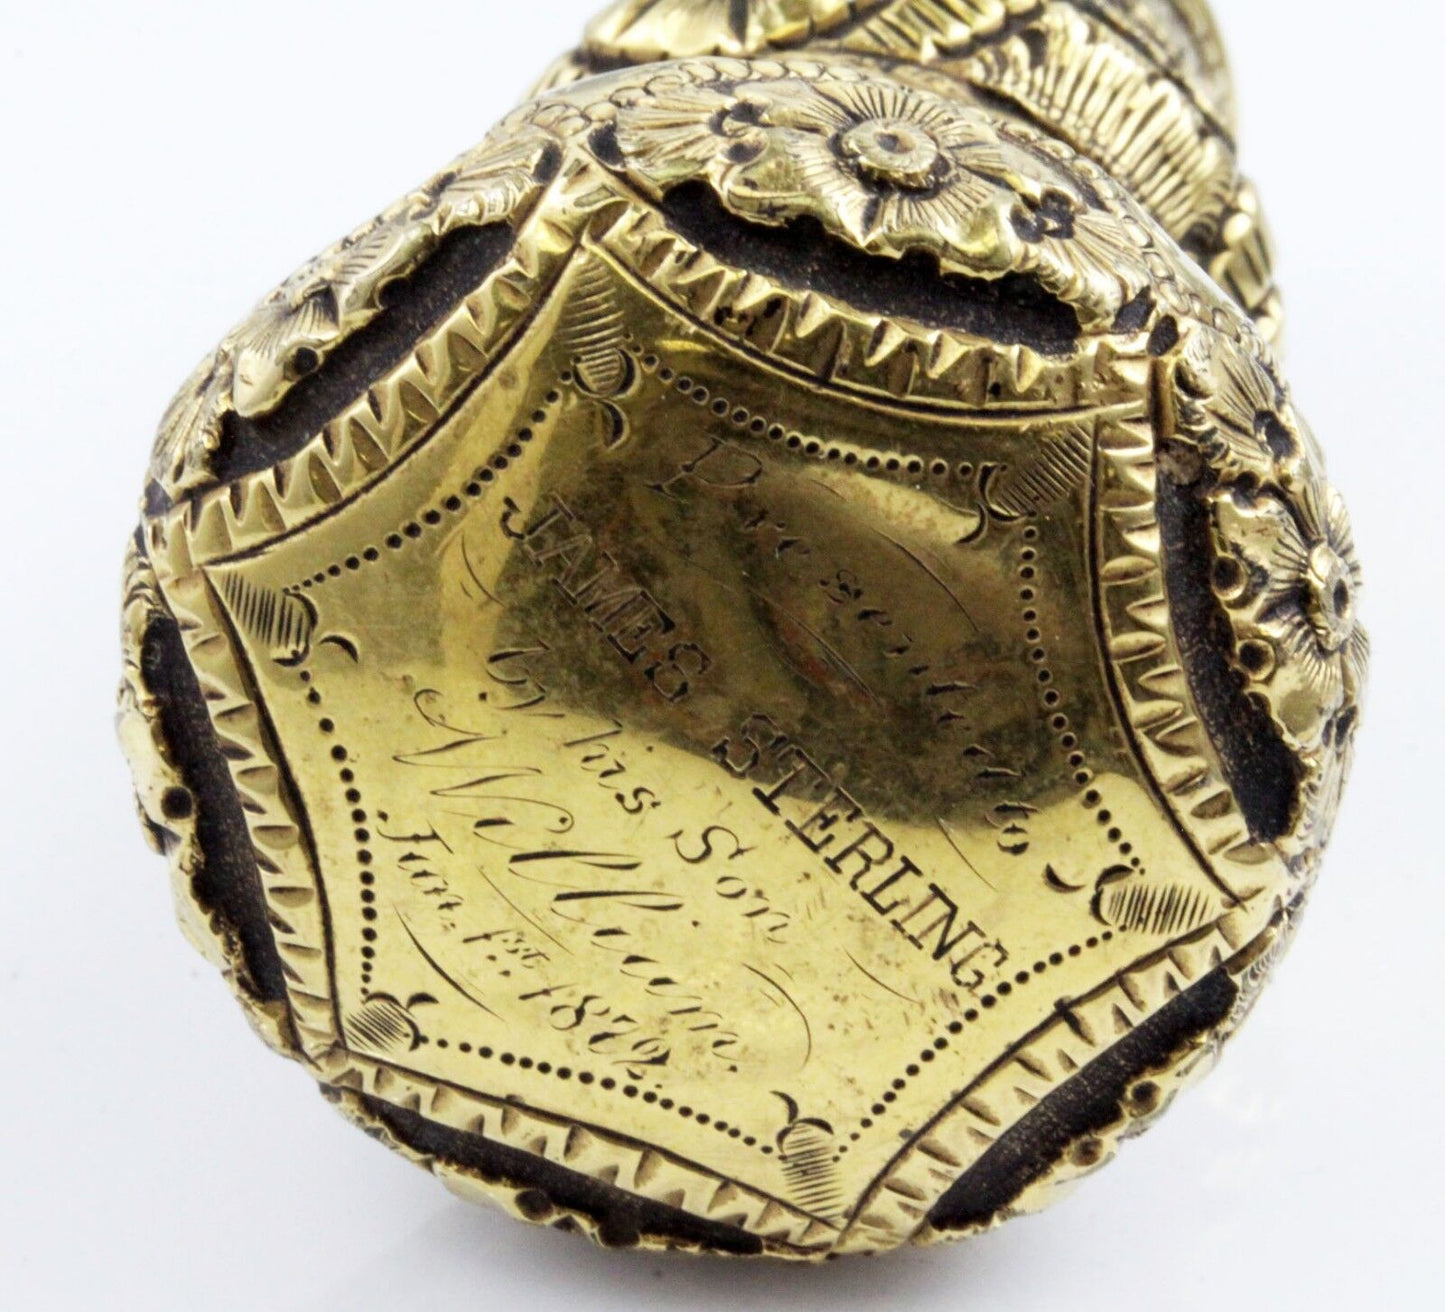 Antique Walking Cane 18K Gold Top Ebony Inscribed 1872